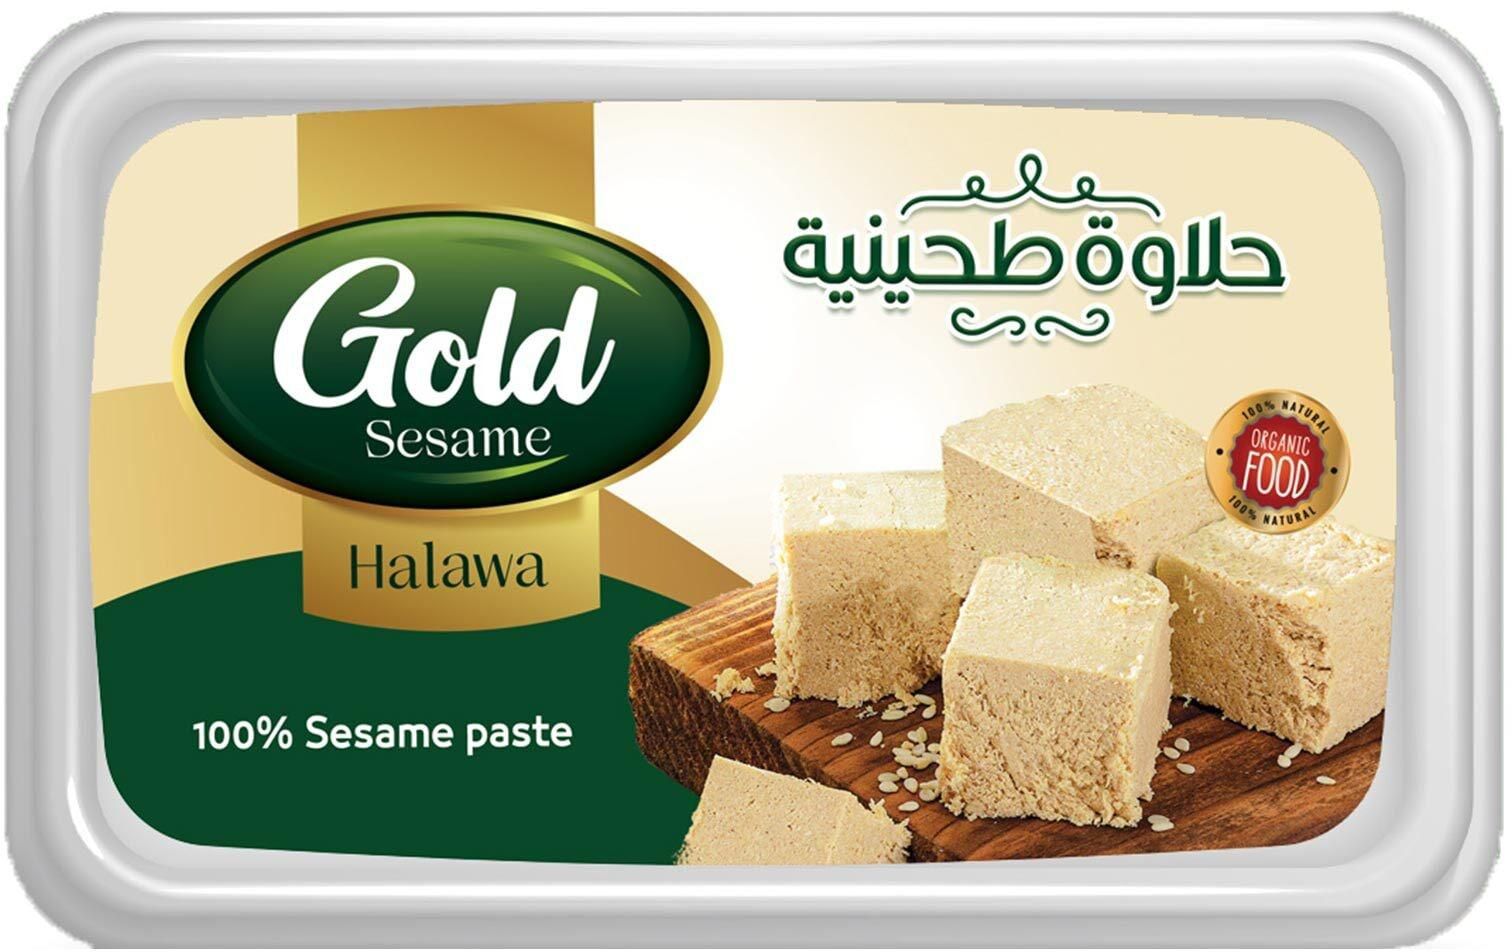 Gold Sesame Halawa - 900 gram